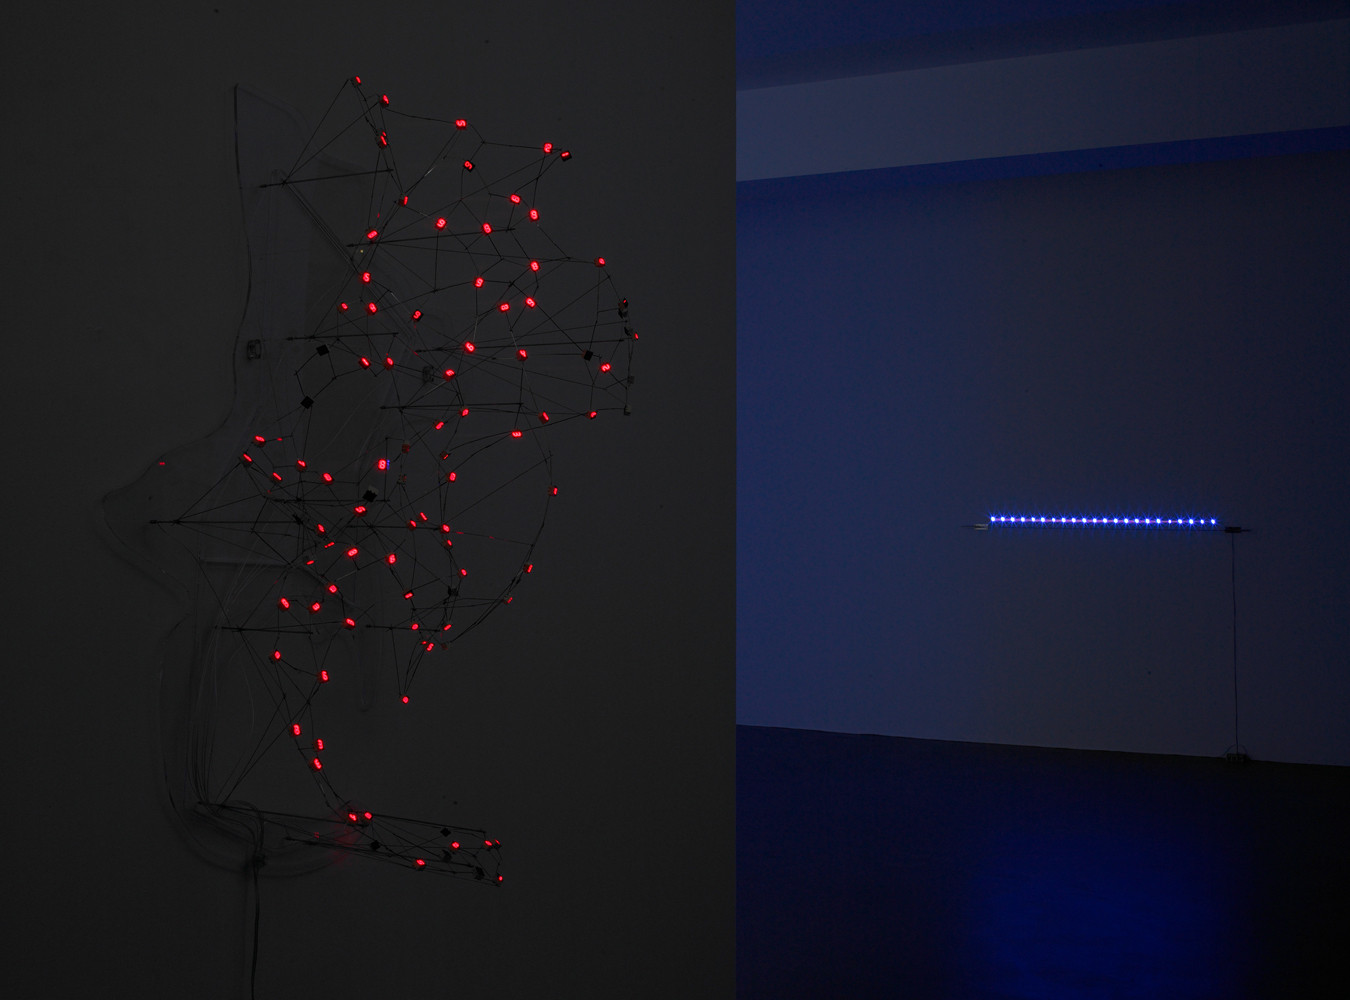 Tatsuo Miyajima, ‘Fragile World’, Installation view, Buchmann Galerie, 2007